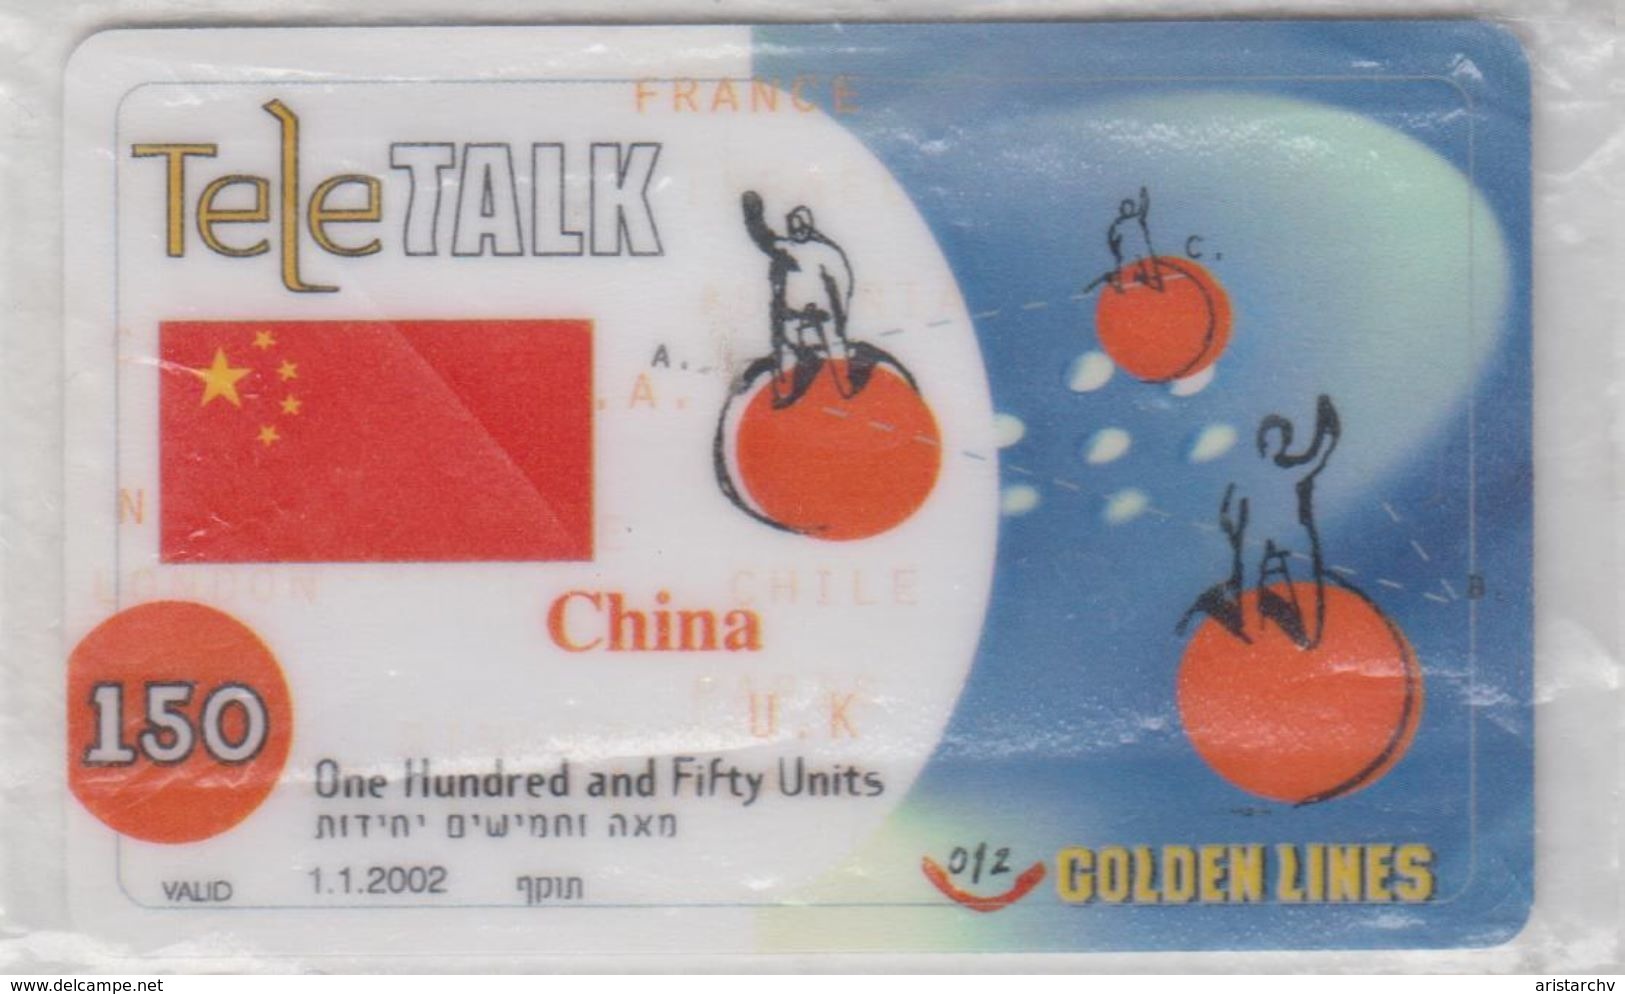 ISRAEL 2002 012 GOLDEN LINES TELETALK 150 CHINA 250 350 THAILAND 3 MINT PHONE CARDS - Israel